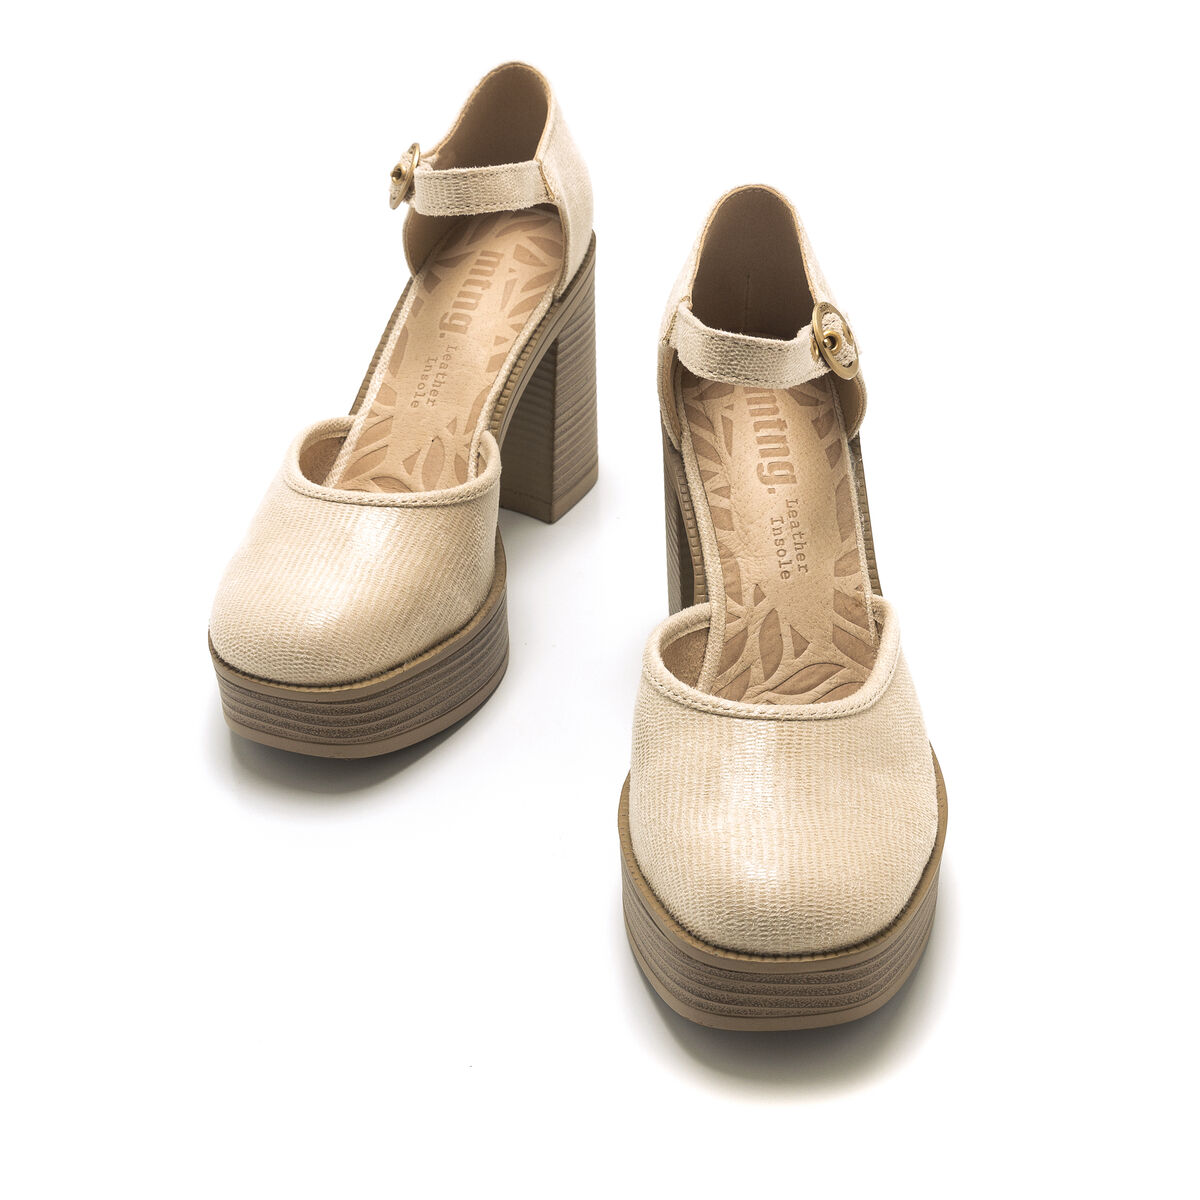 Zapatos de tacon de Mujer modelo NEW 67 de MTNG image number 6